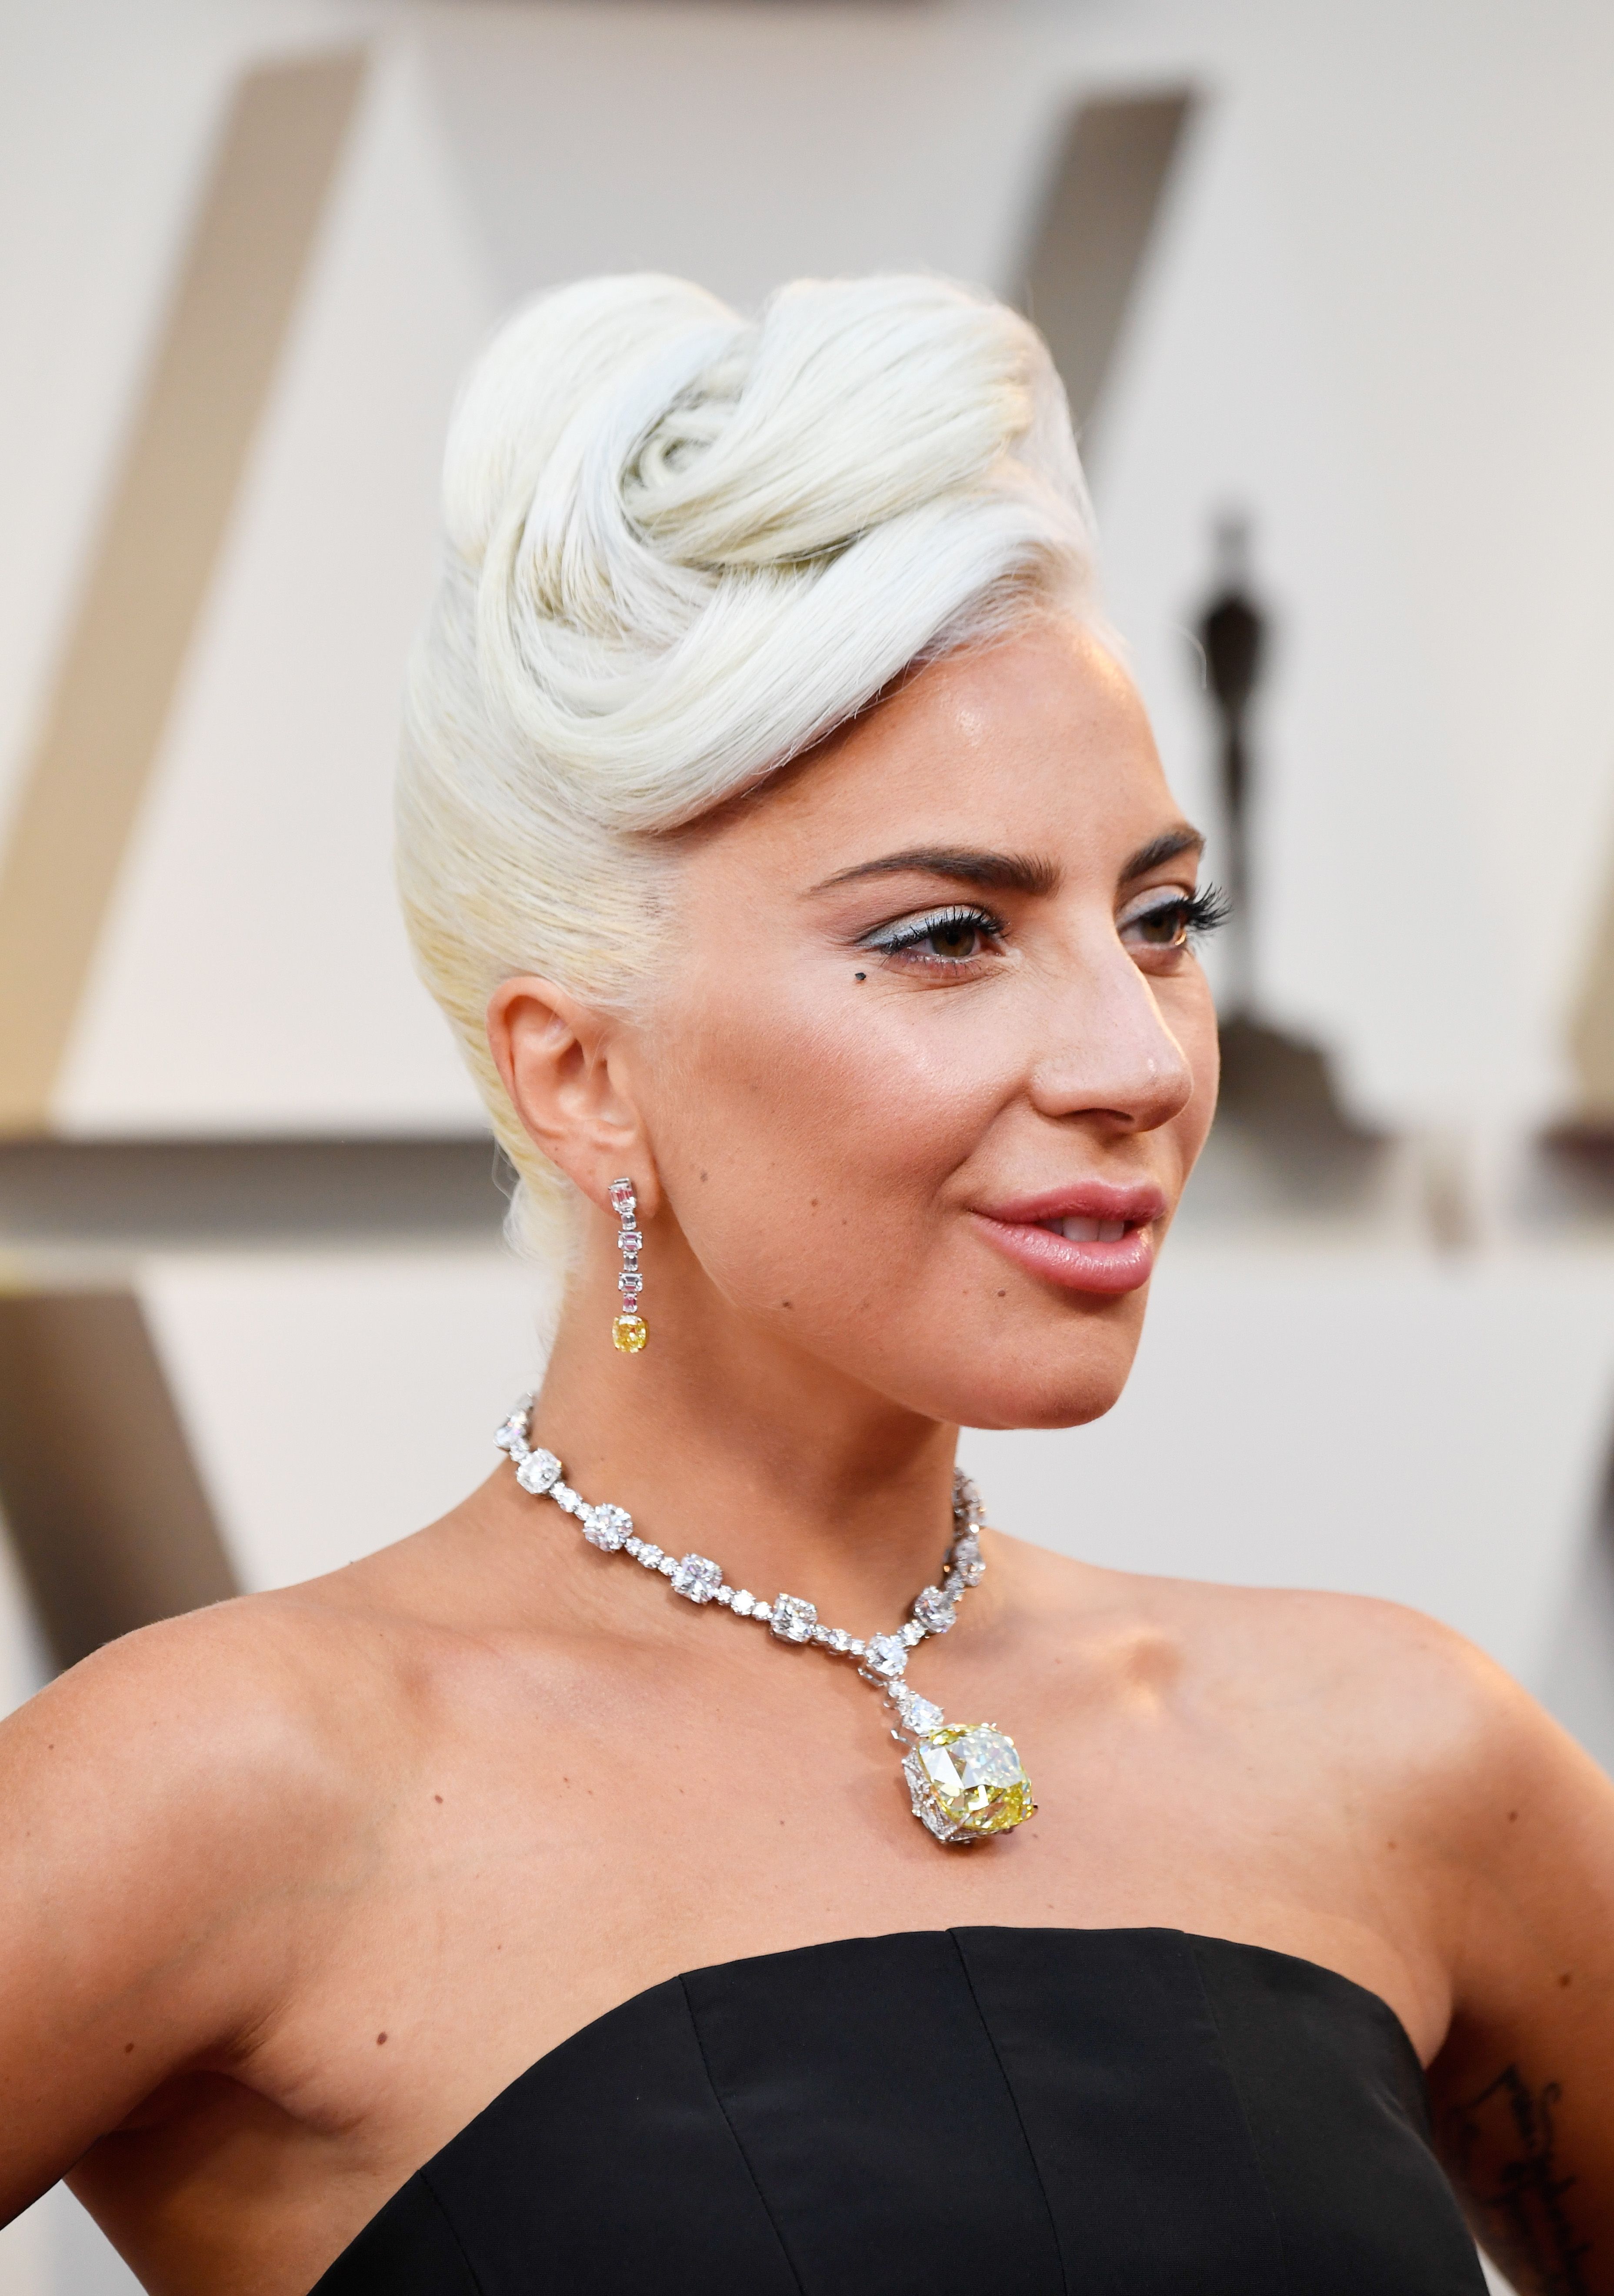 Lady Gaga's Giant Hair Bows Have Made Their Epic Return - The Tease